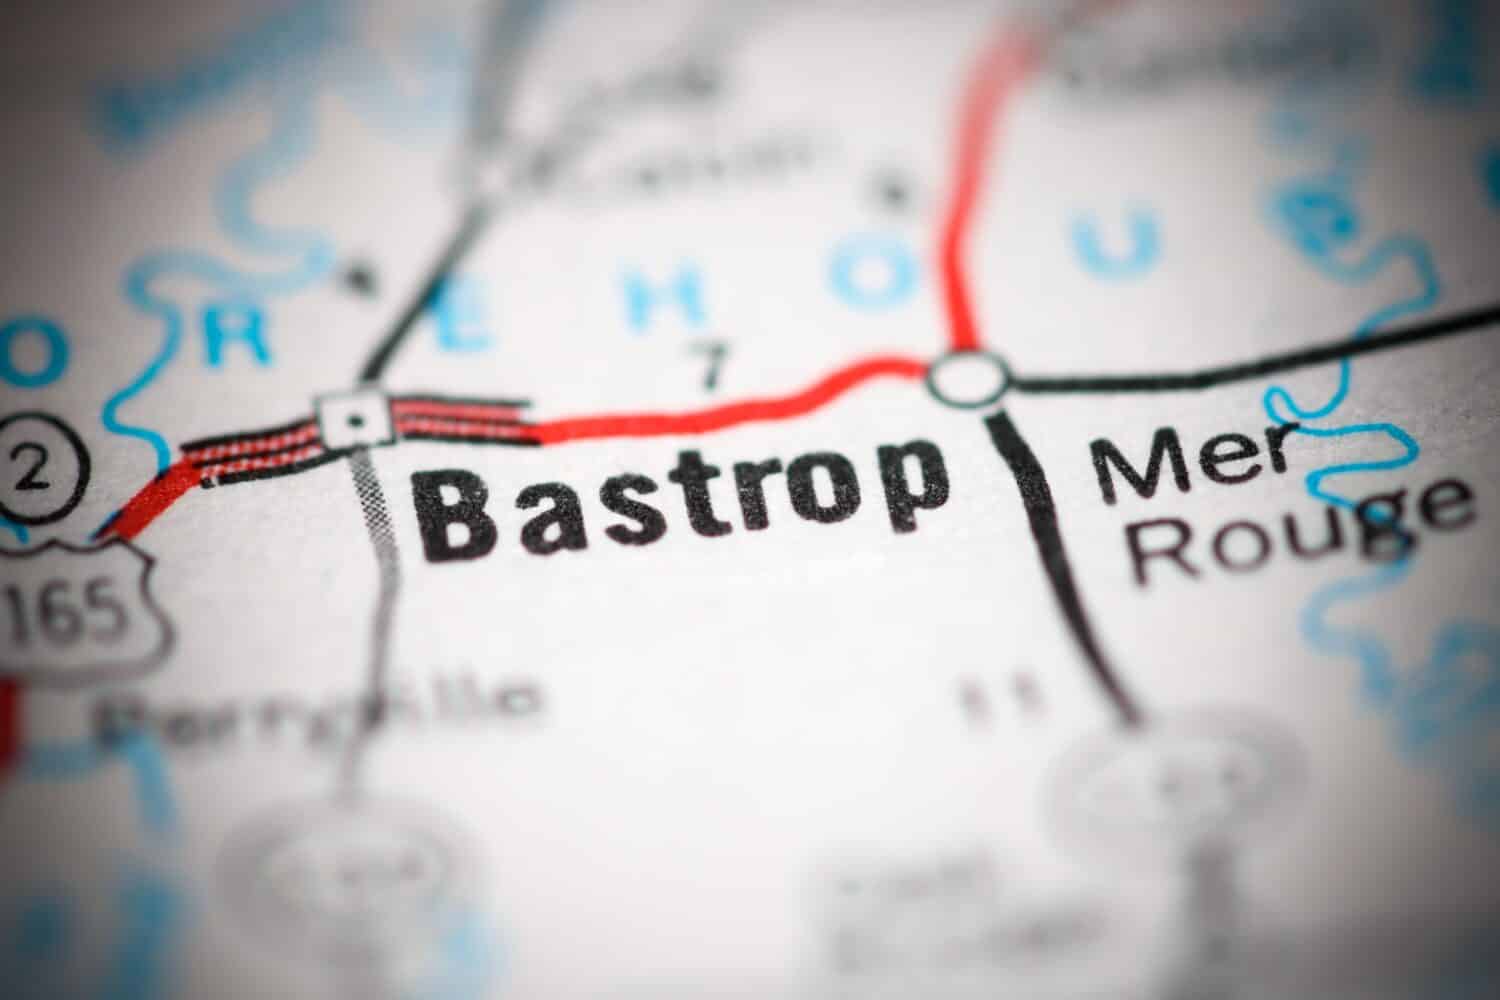 Bastrop. Louisiana. USA on a geography map